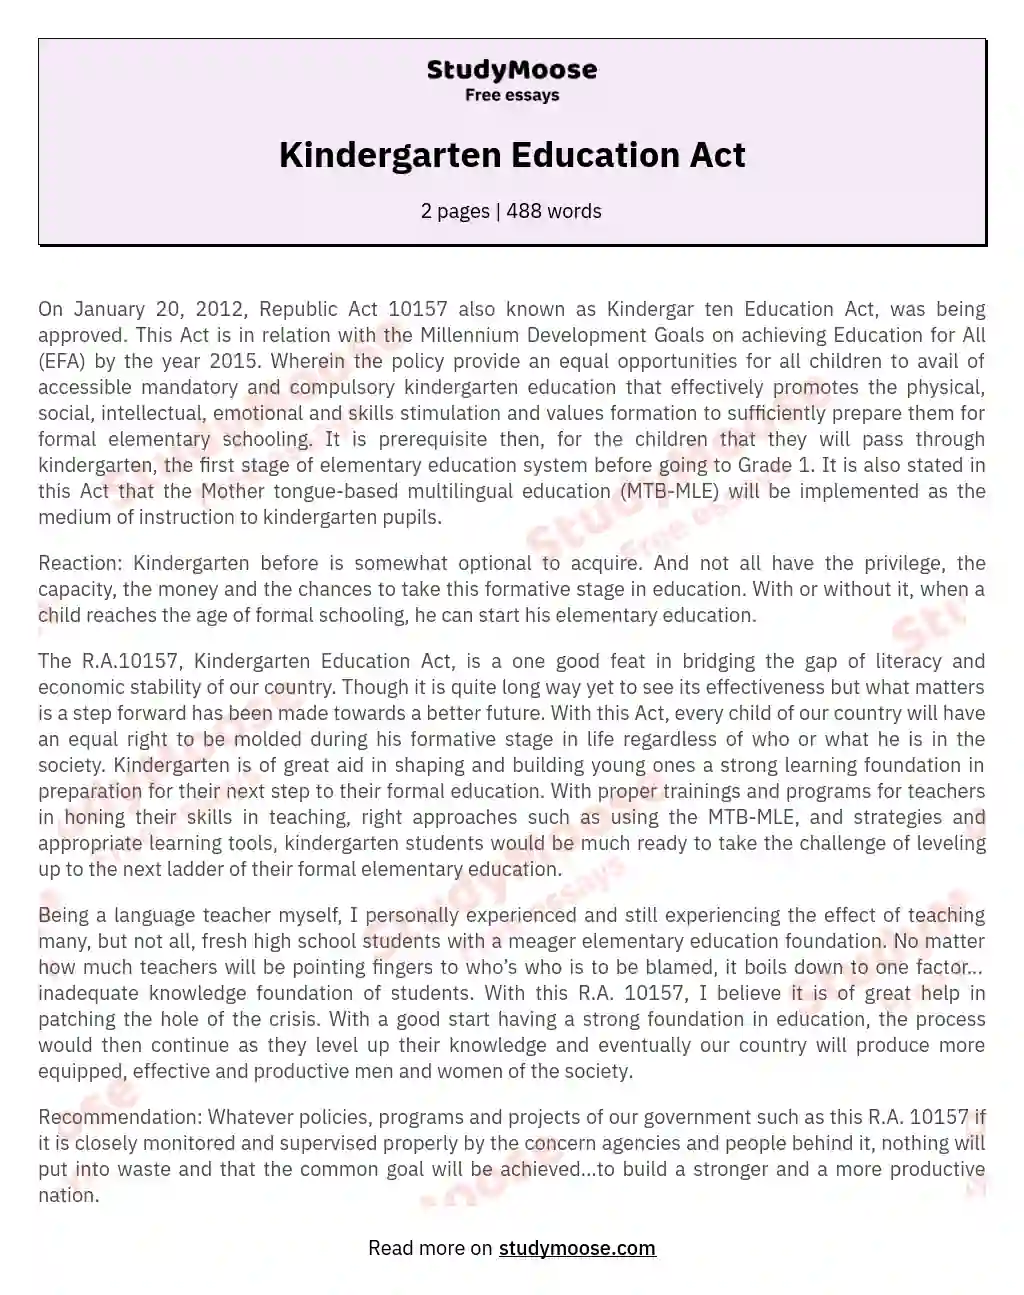 Kindergarten Education Act essay